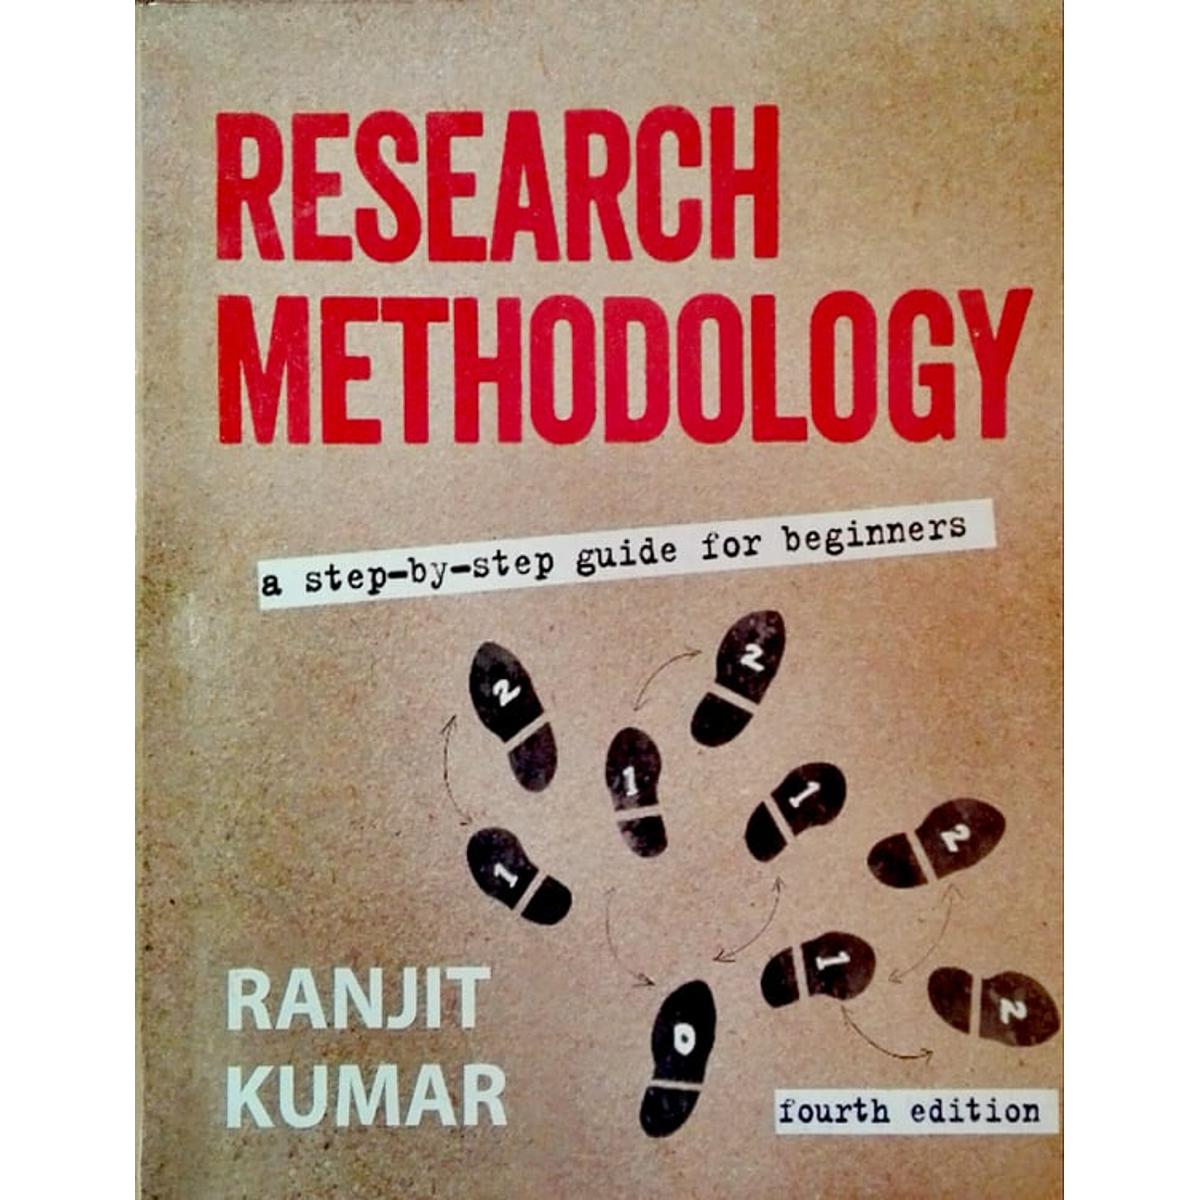 Research Methodology 4th Edition ( Ranjit Kumar)